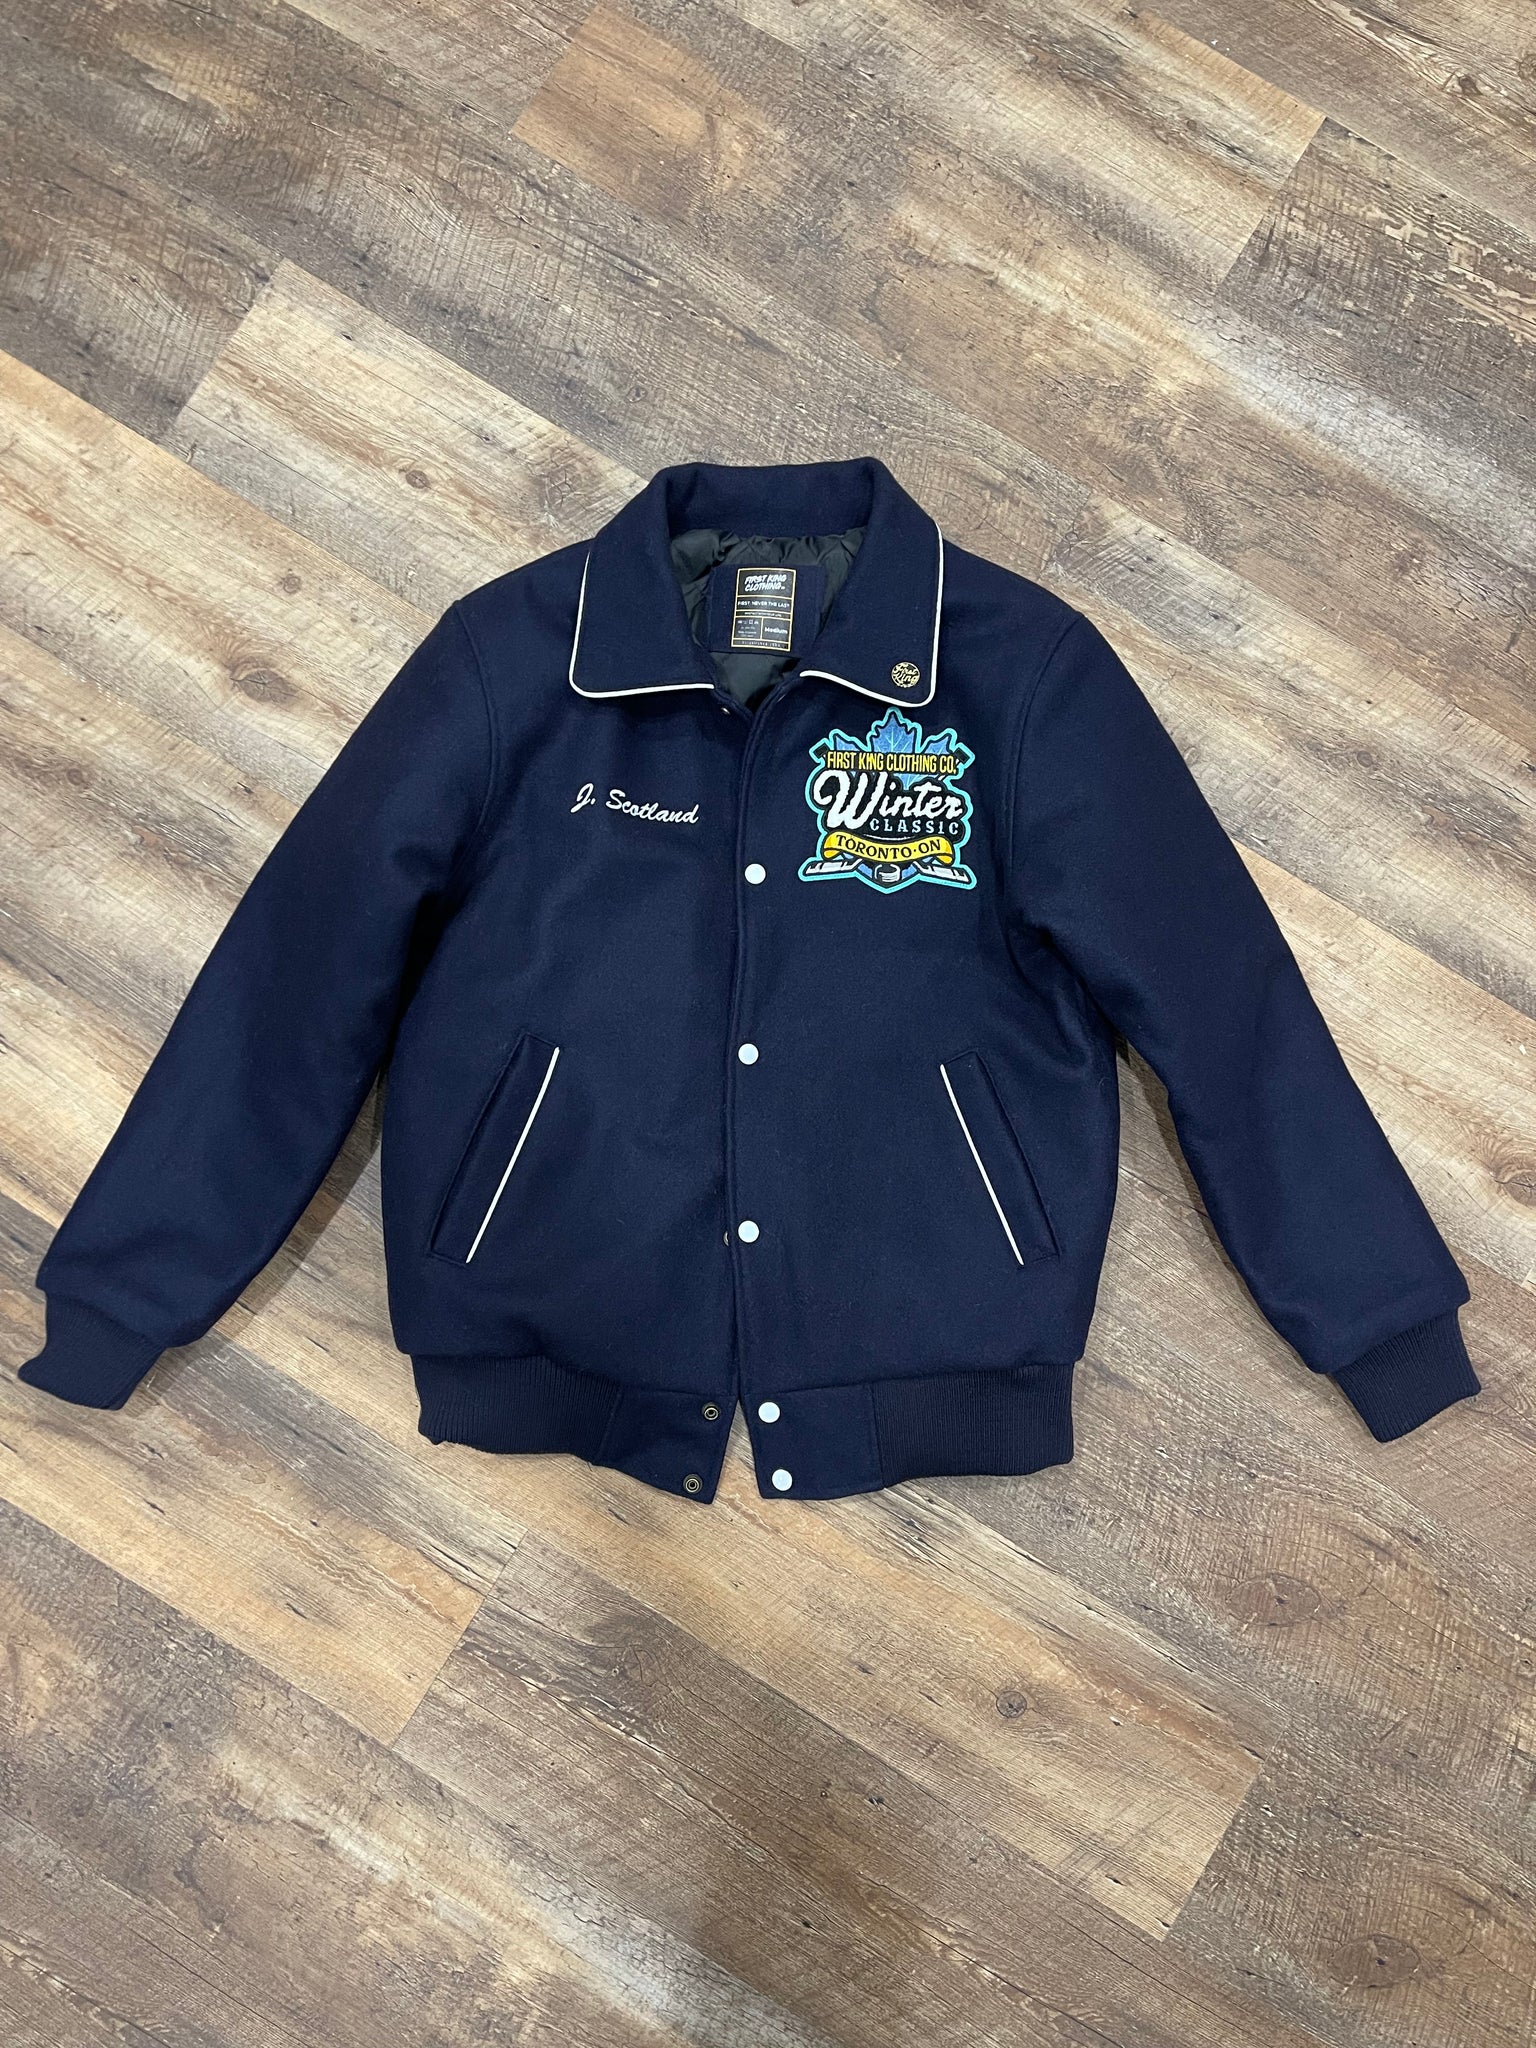 First King Clothing Co Custom Jacket Navy/White